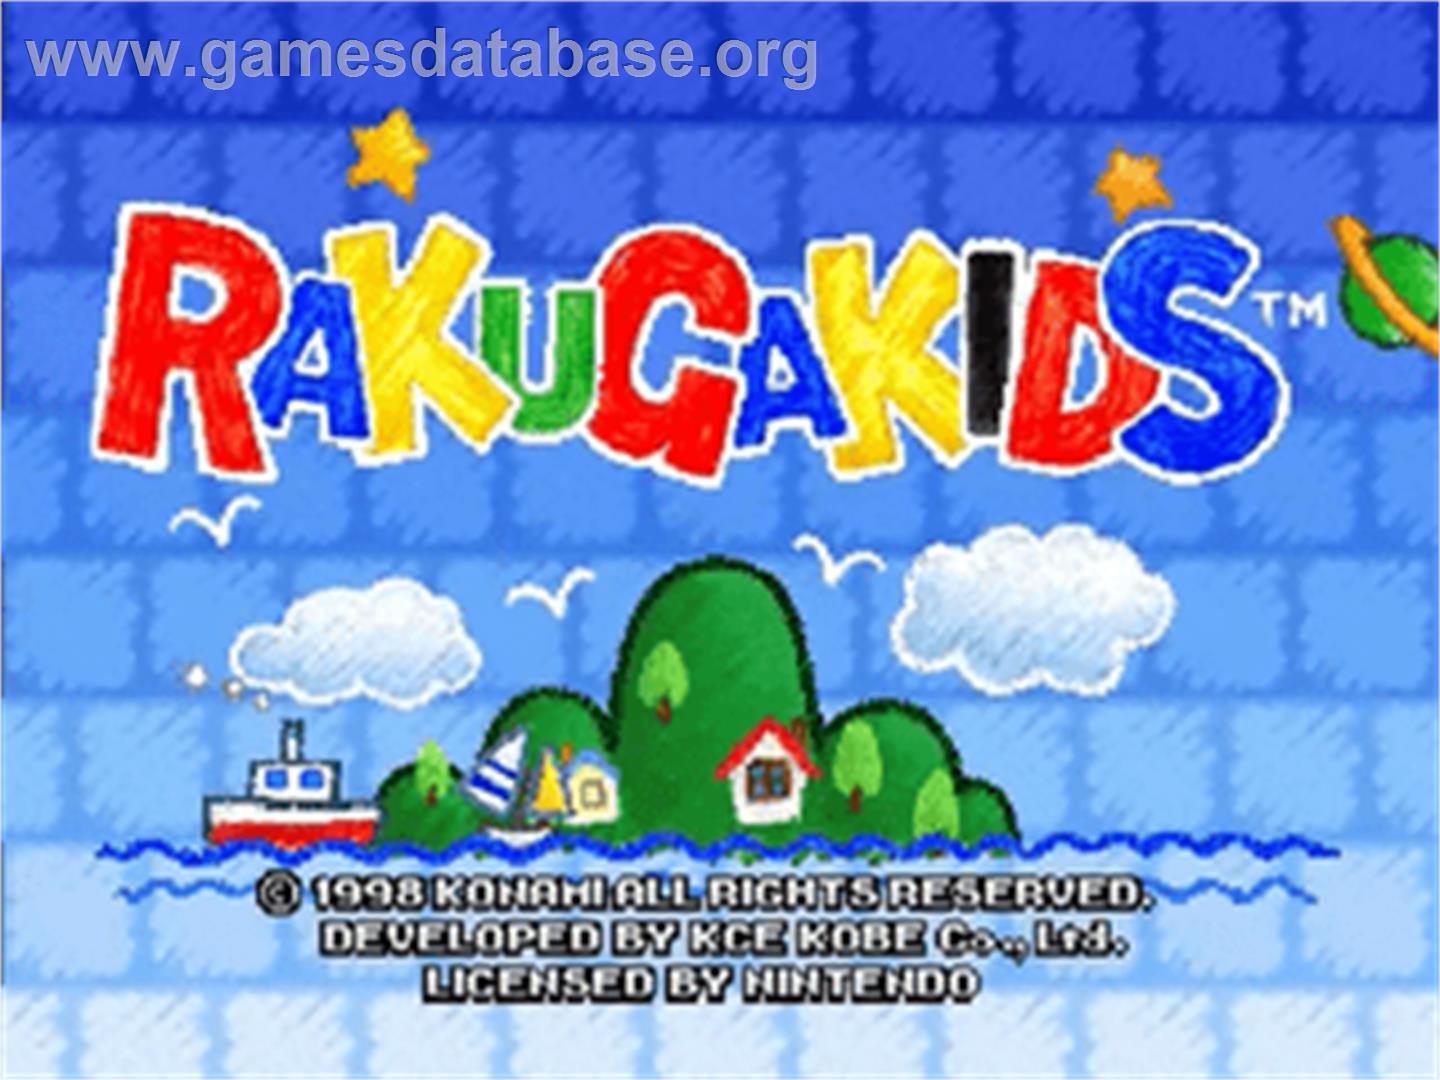 Rakugakids - Nintendo N64 - Artwork - Title Screen